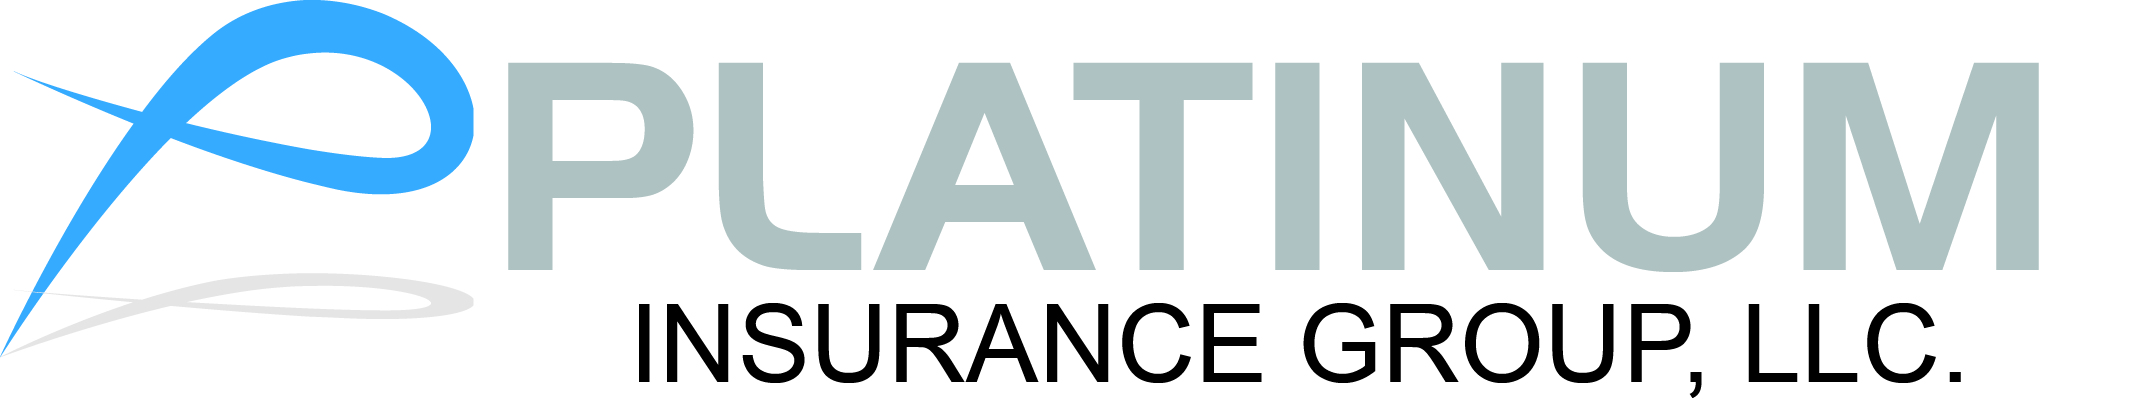 Platinum Insurance Group, LLC's logo